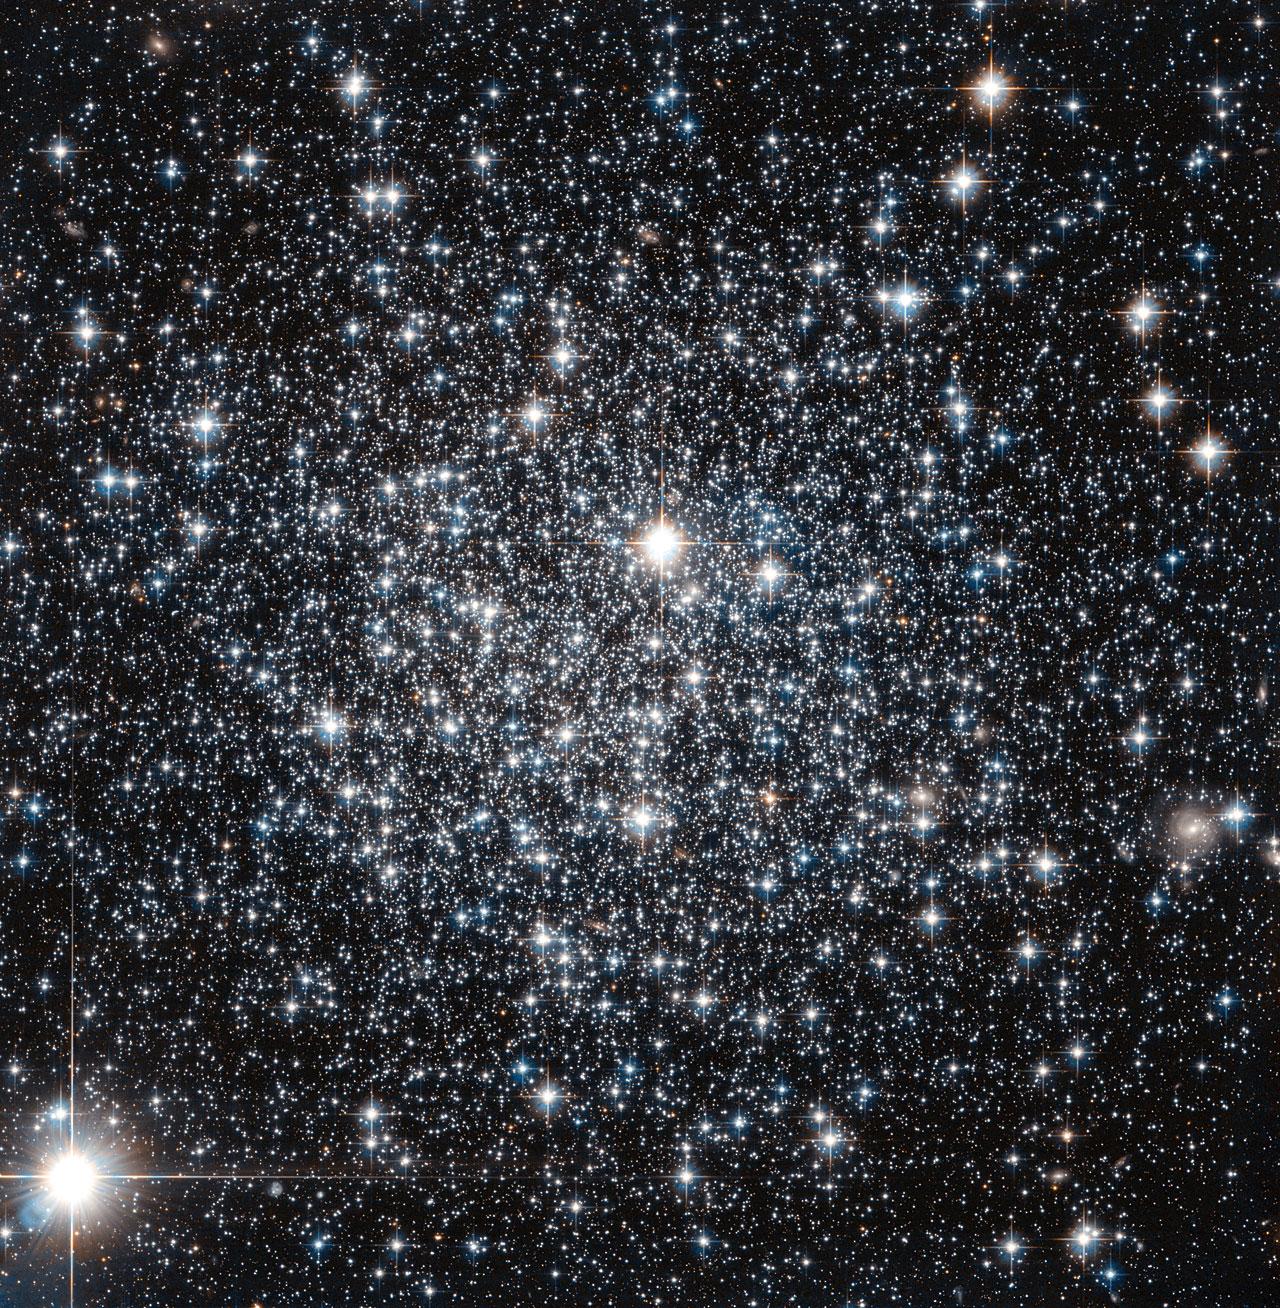 Hubble telescope captures spectacular image of globular cluster